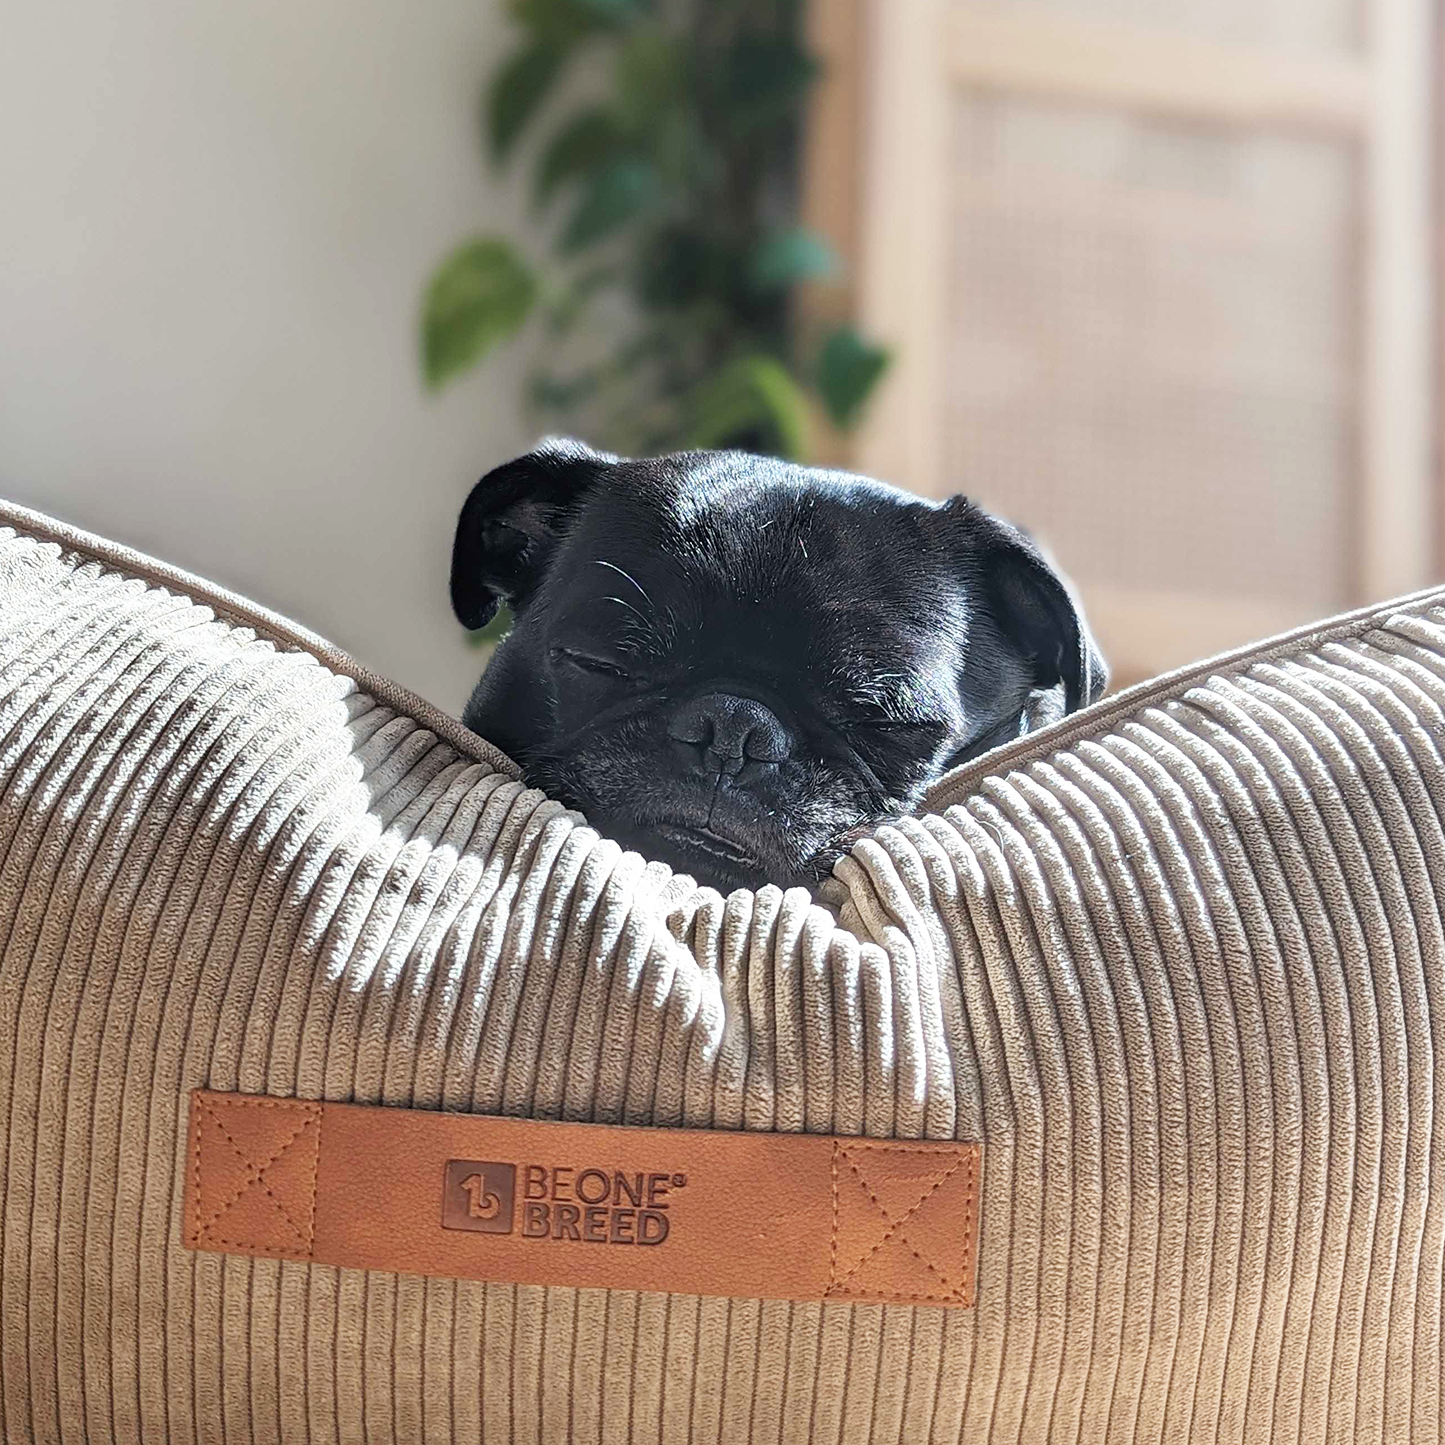 Memory foam dog bed with headrest, beige